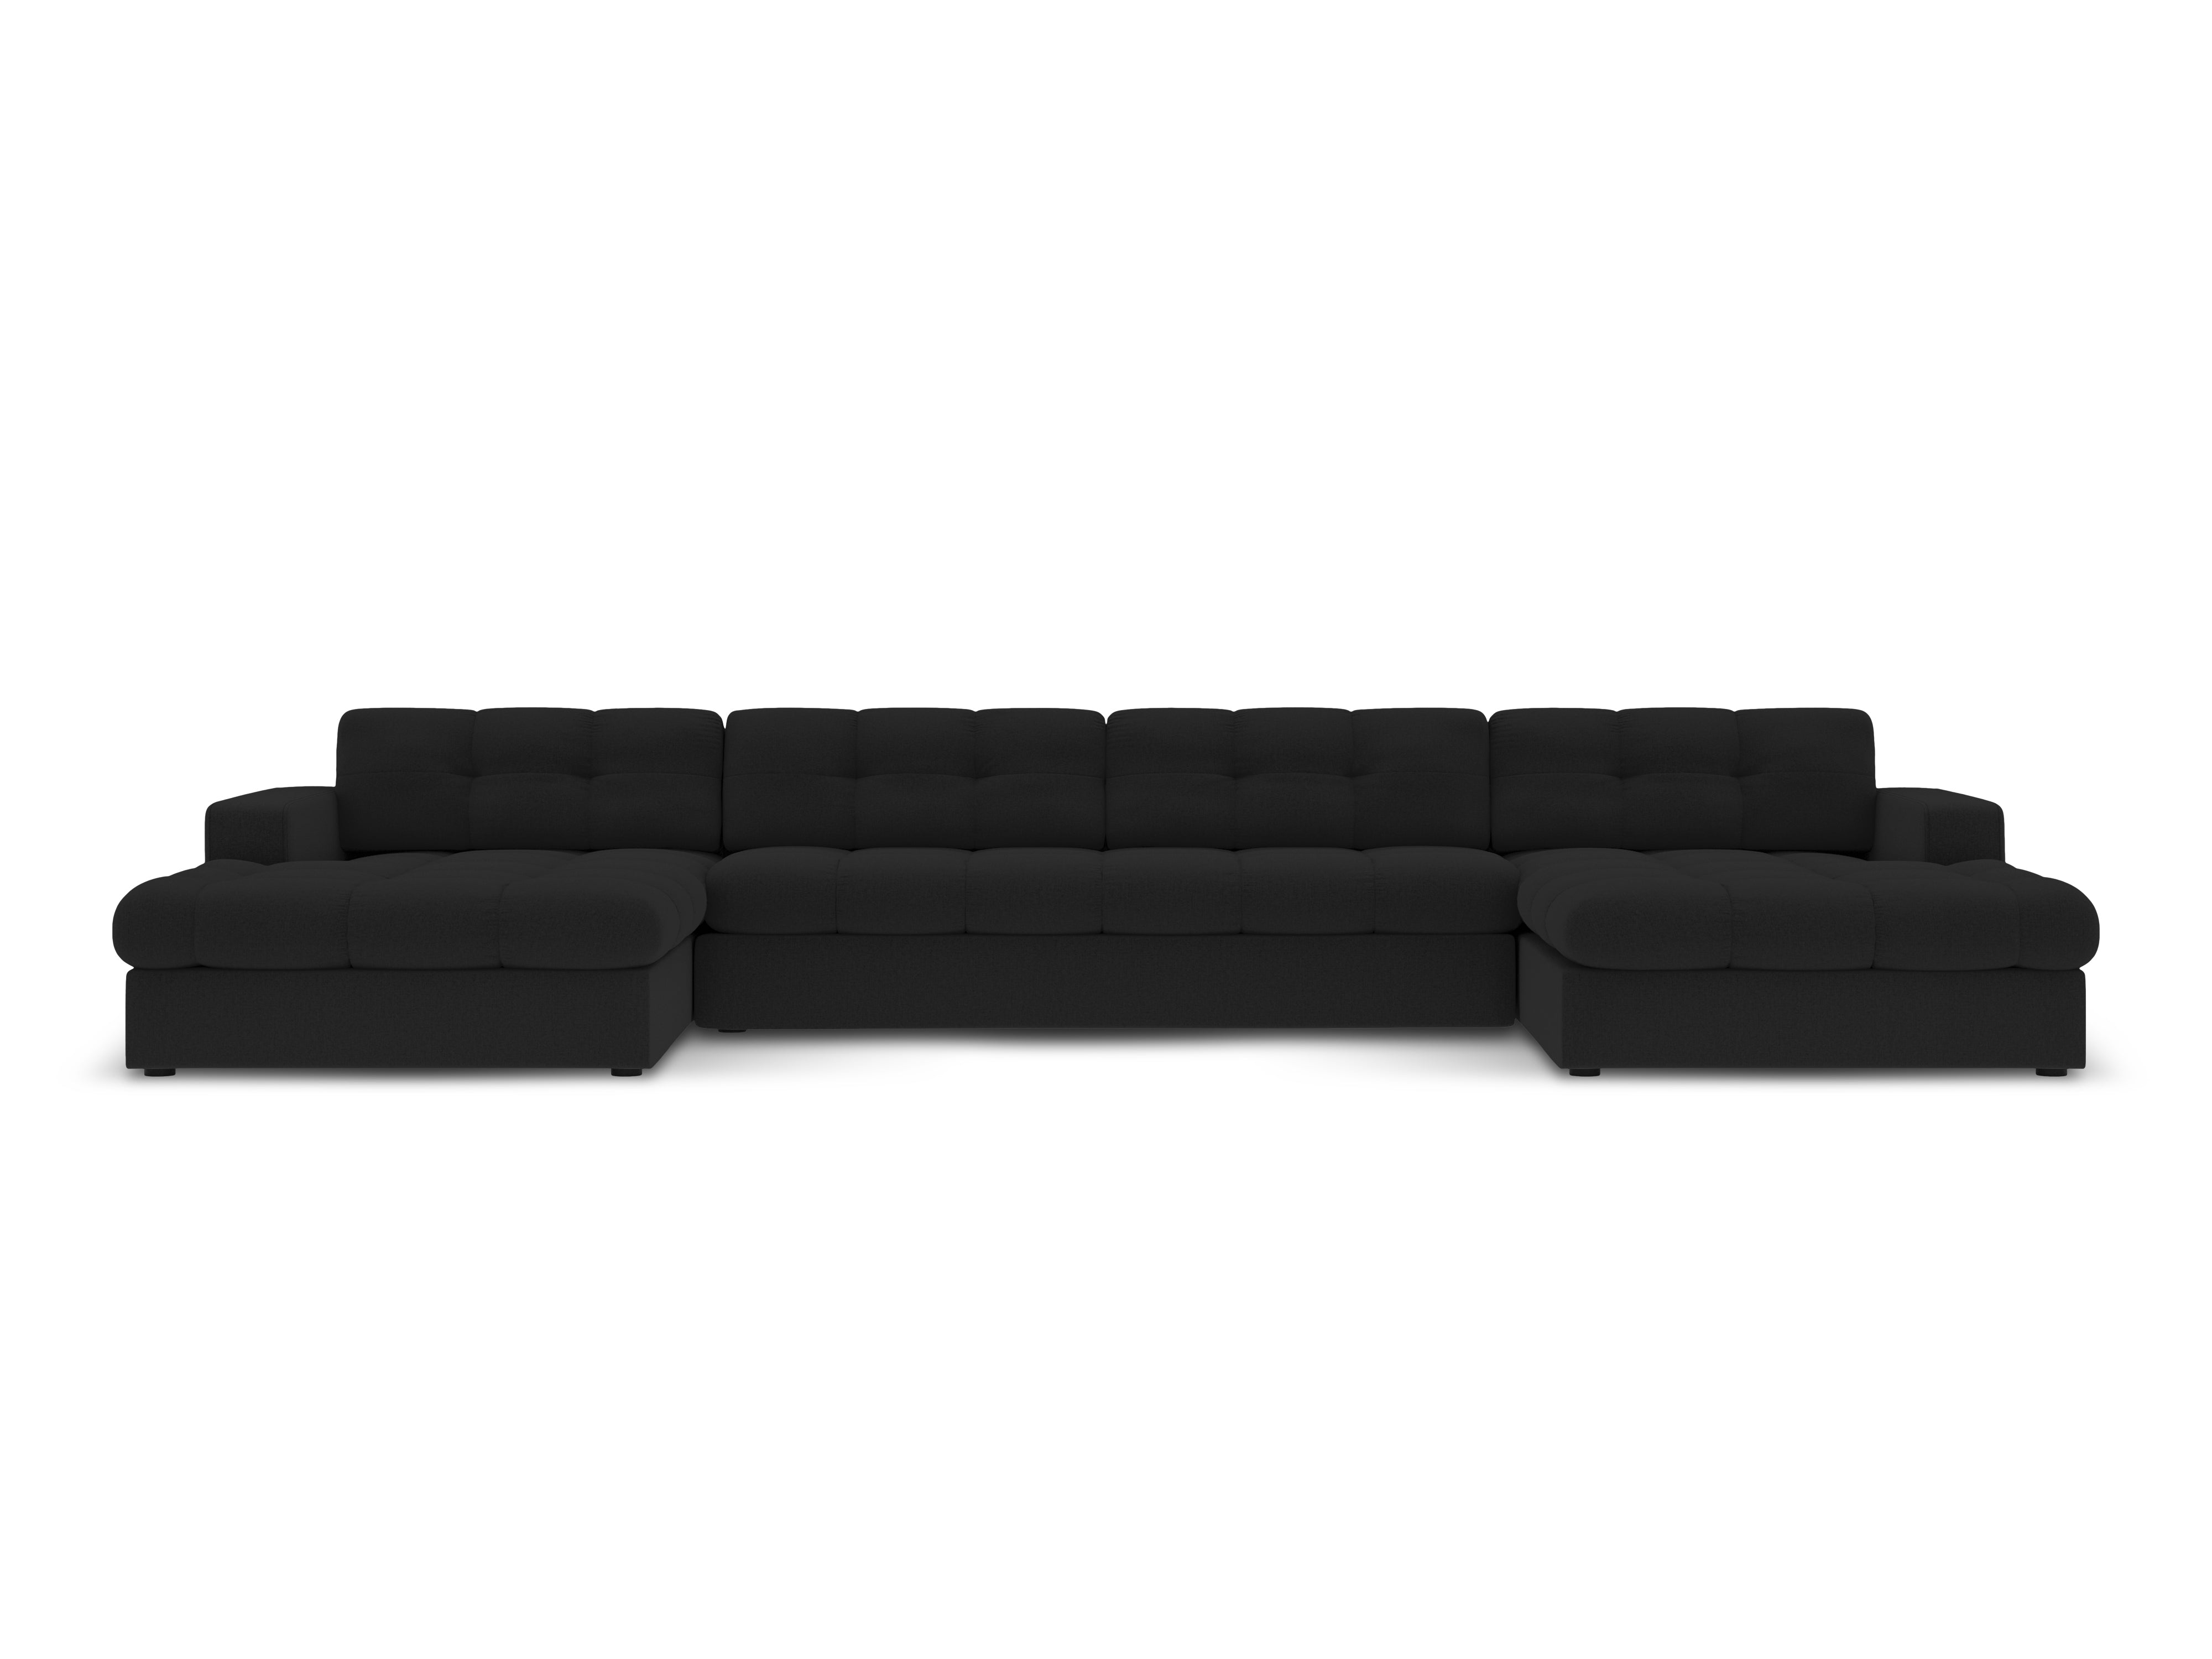 Panoramic Sofa, "Justin", 5 Seats, 294x160x72
Made in Europe, Micadoni, Eye on Design